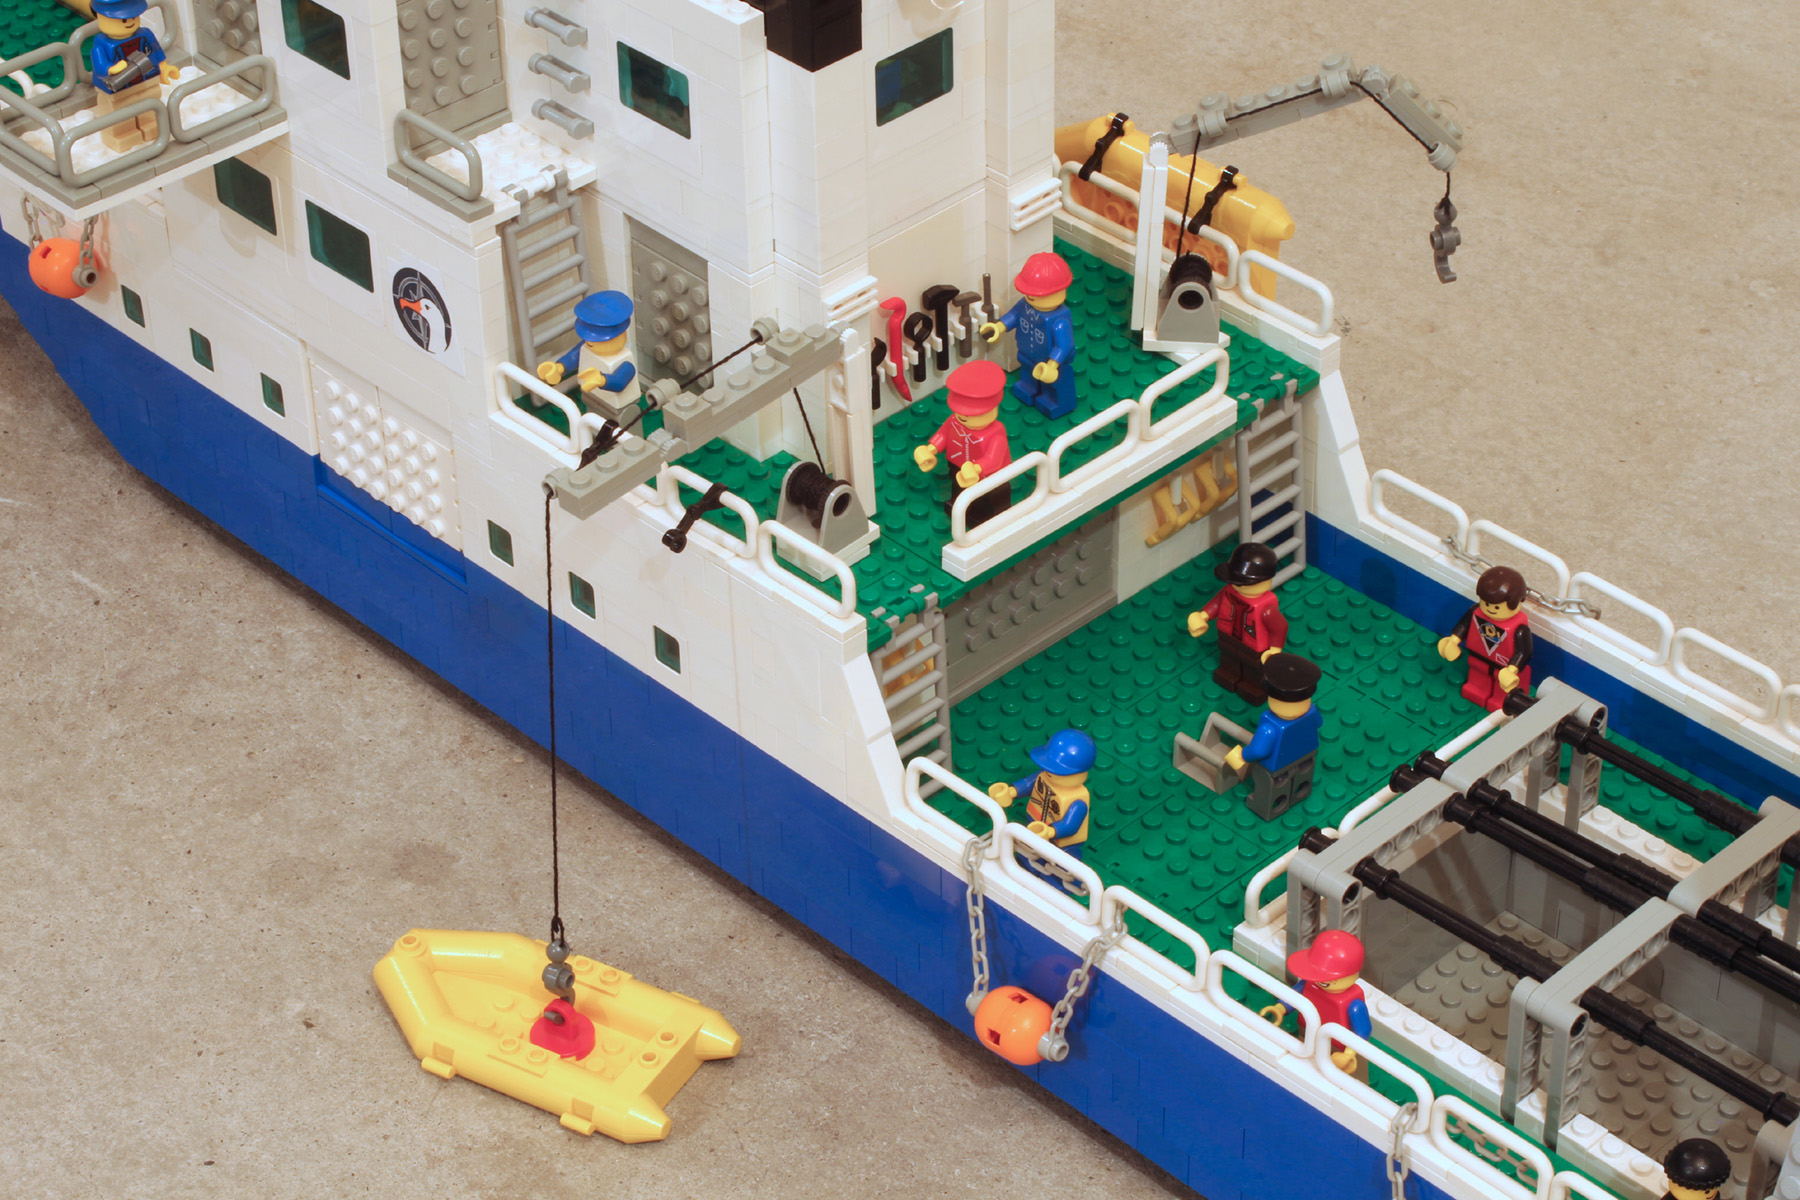 Bateau Lego MOC Ocean Explorer